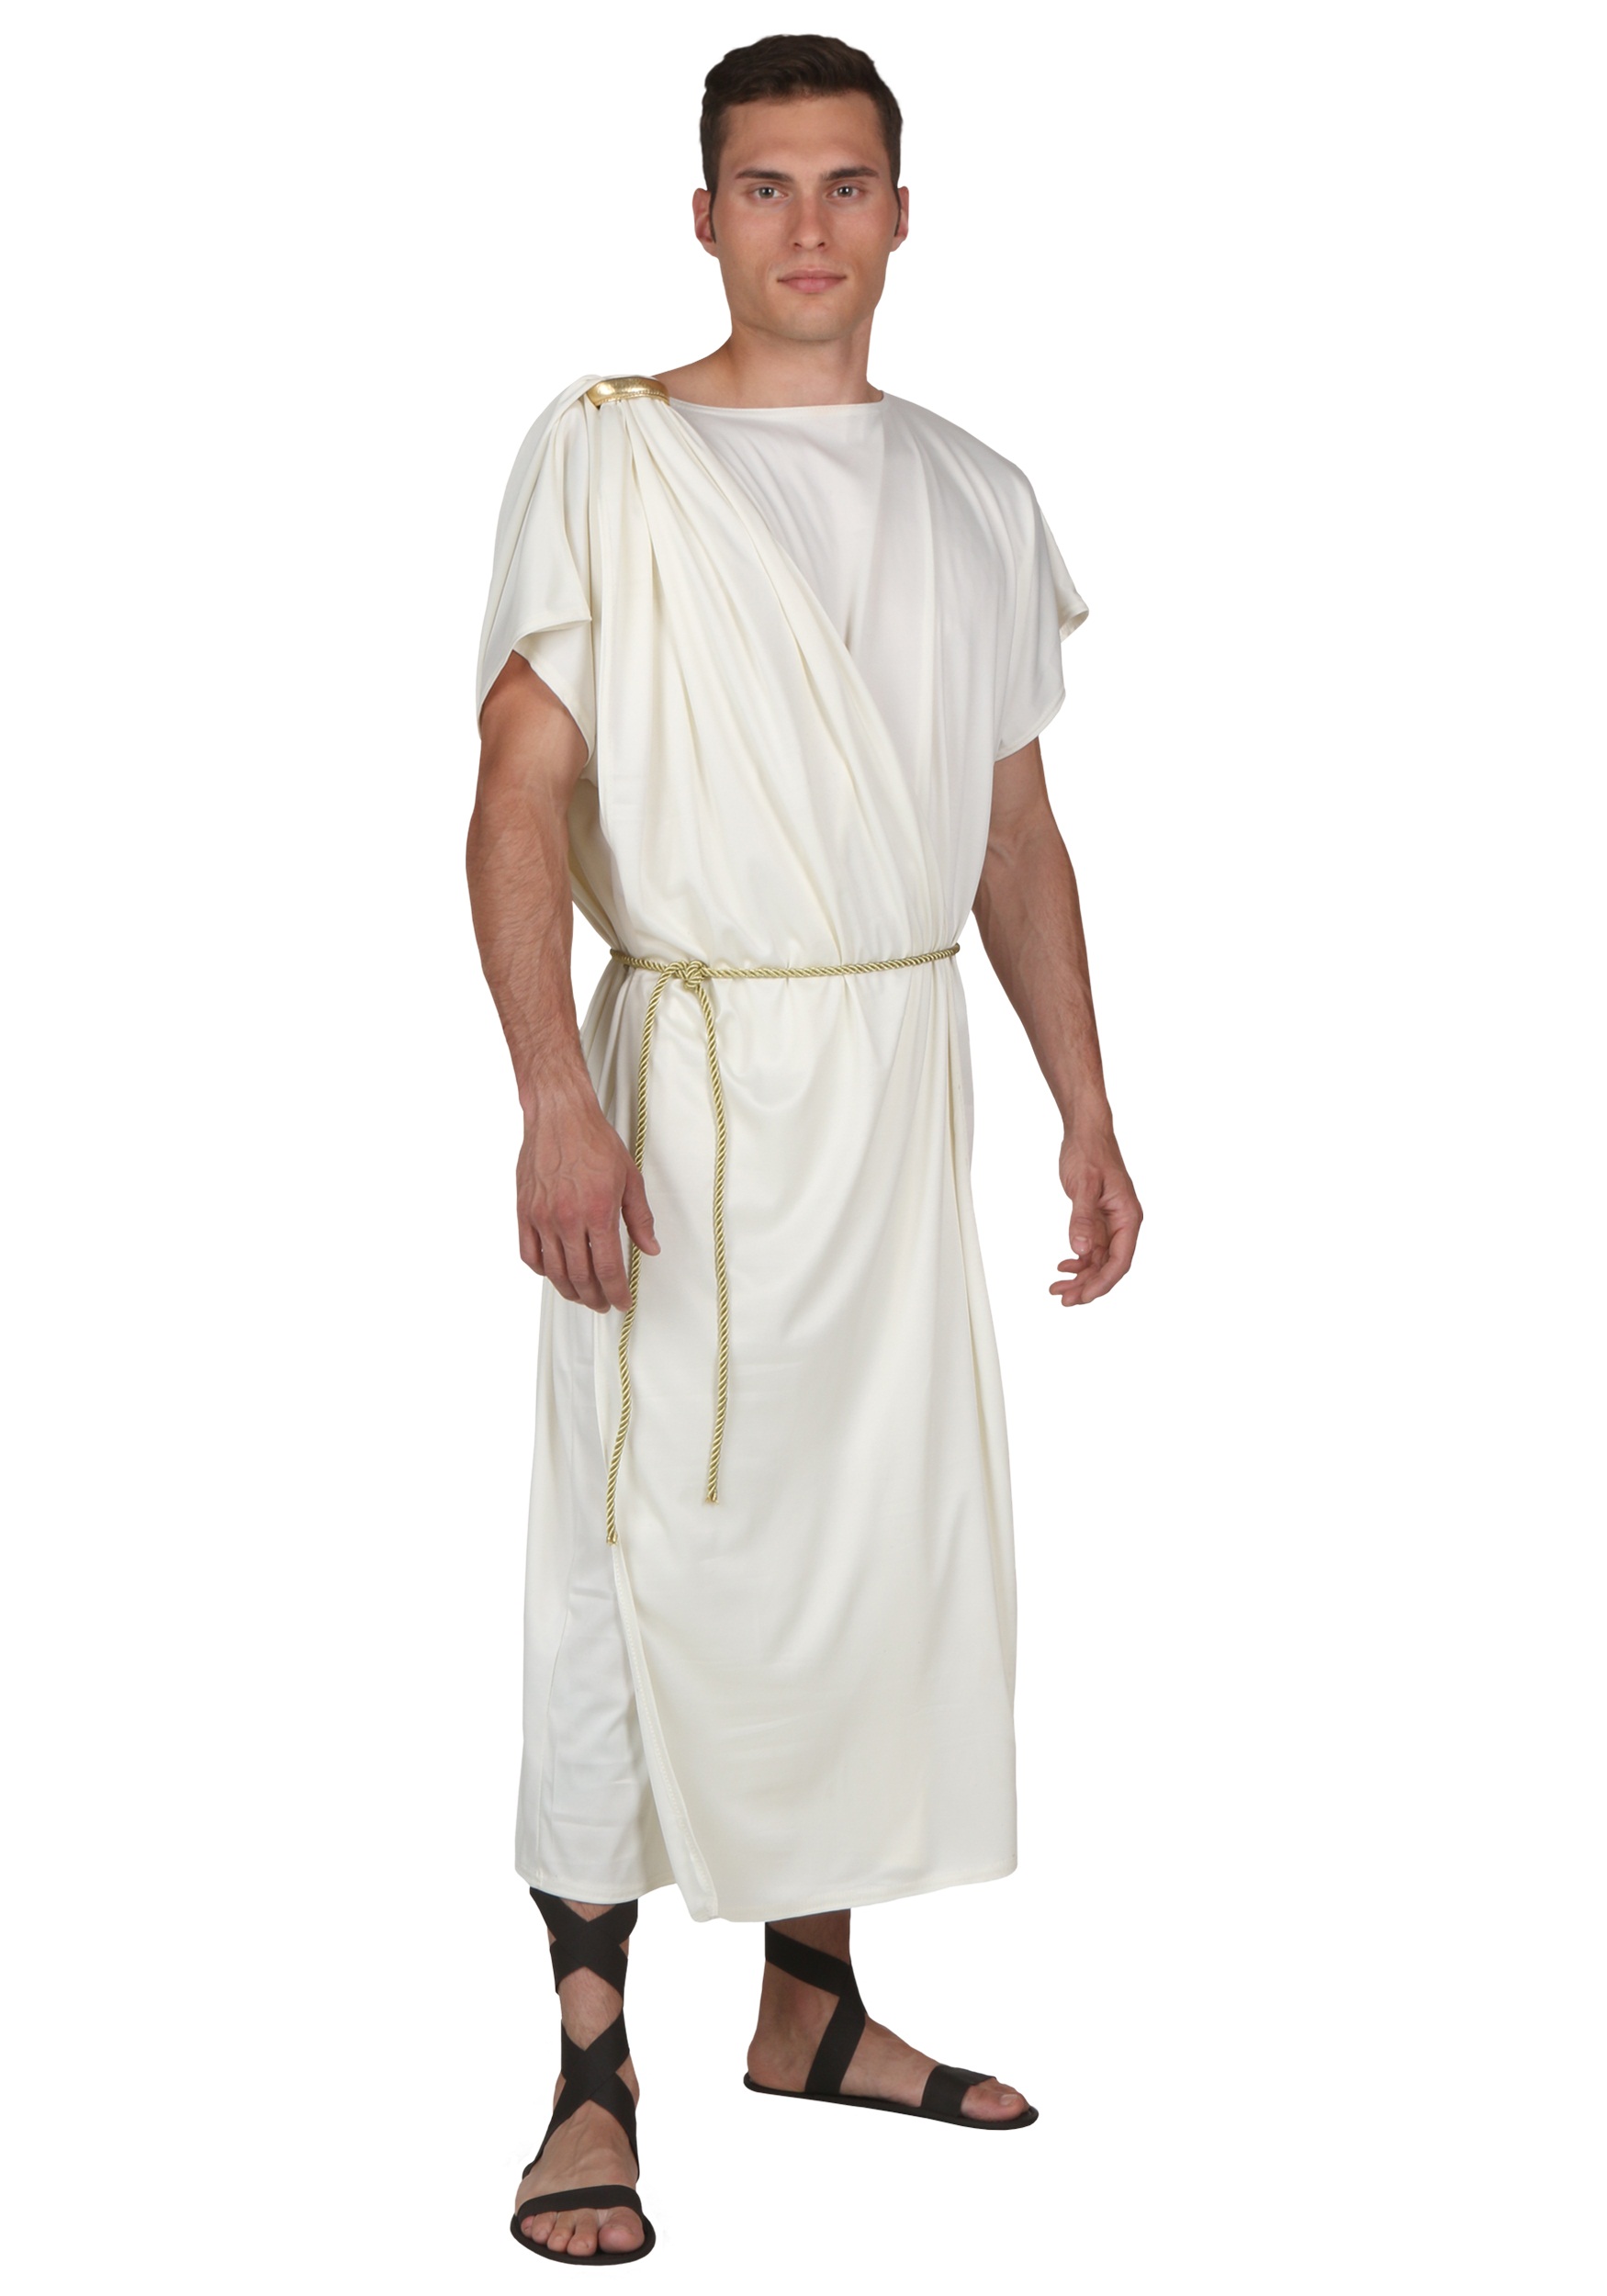 Photos - Fancy Dress FUN Costumes Plus Size Roman Toga Men's Costume White FUN2298PL